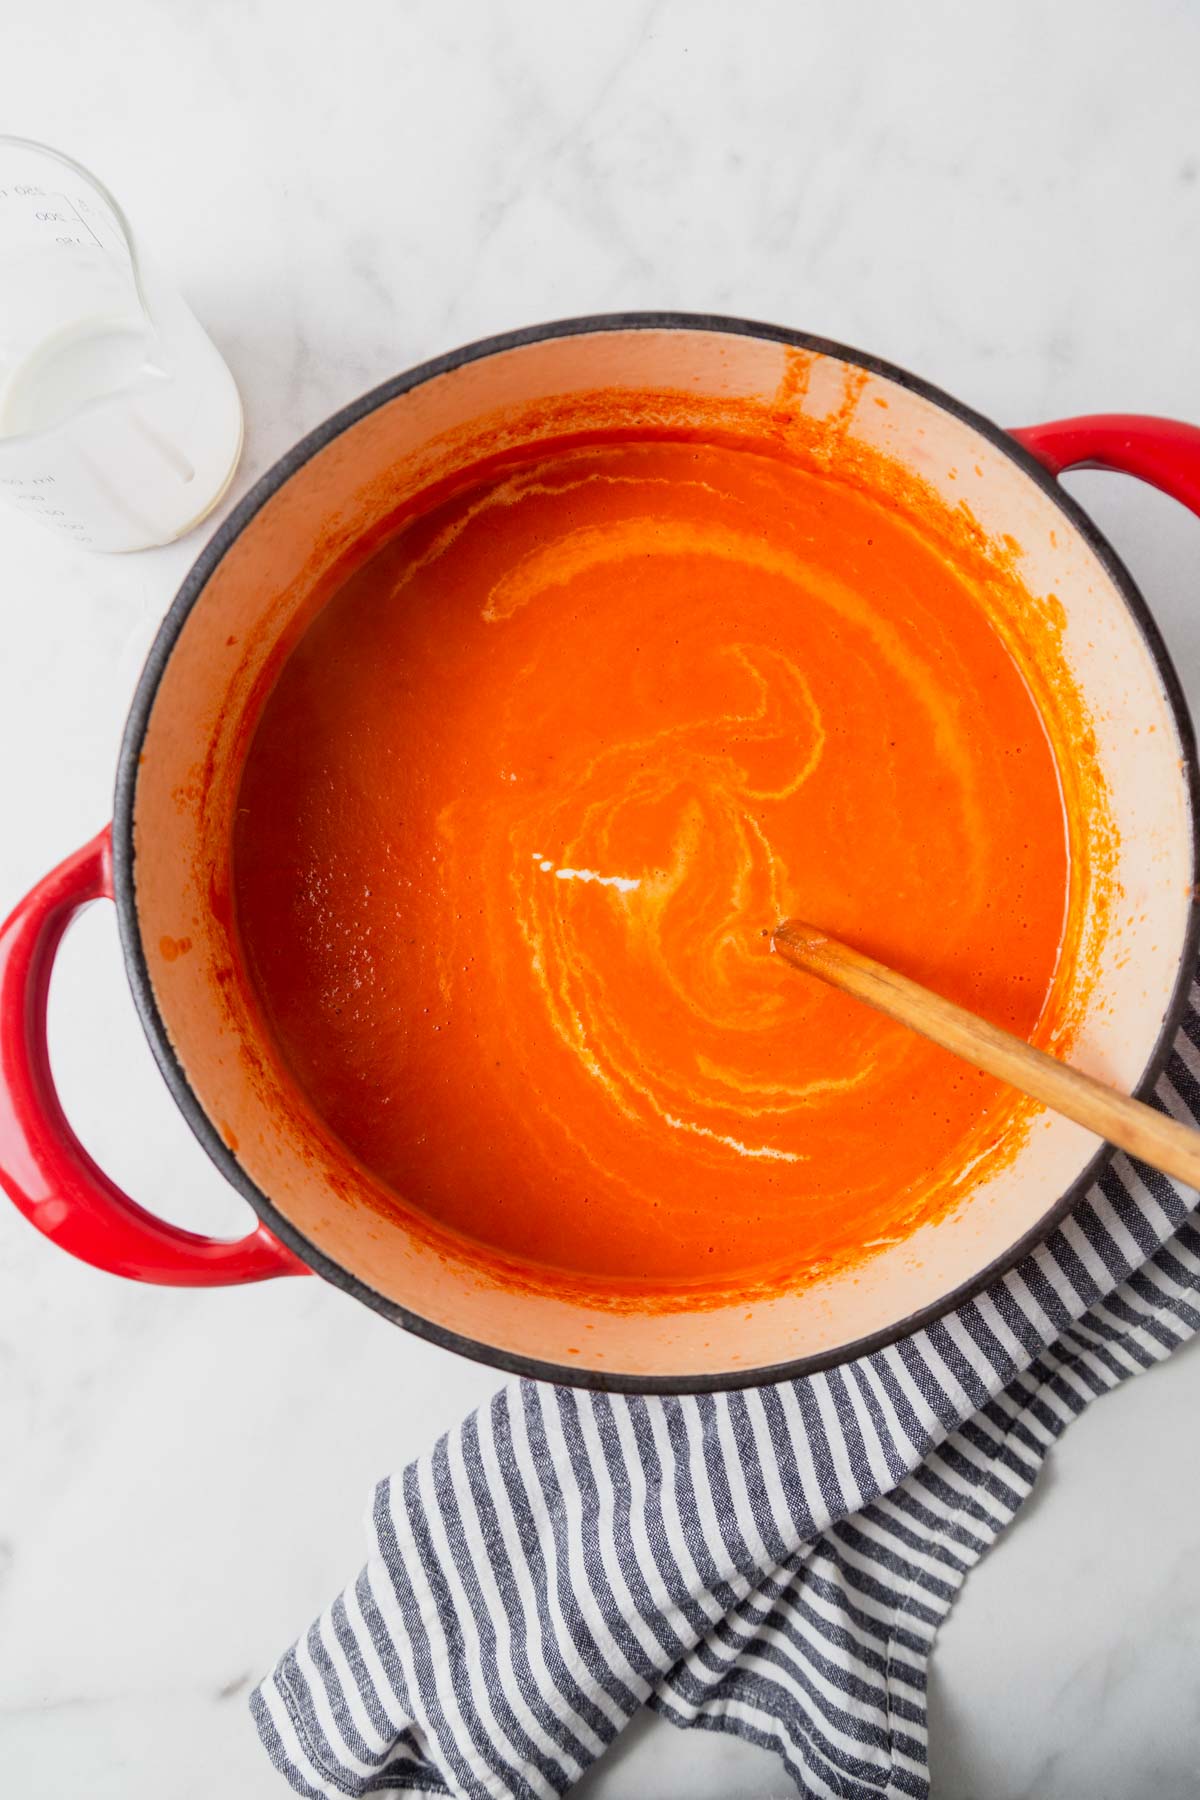 adding cream to the tomato soup.